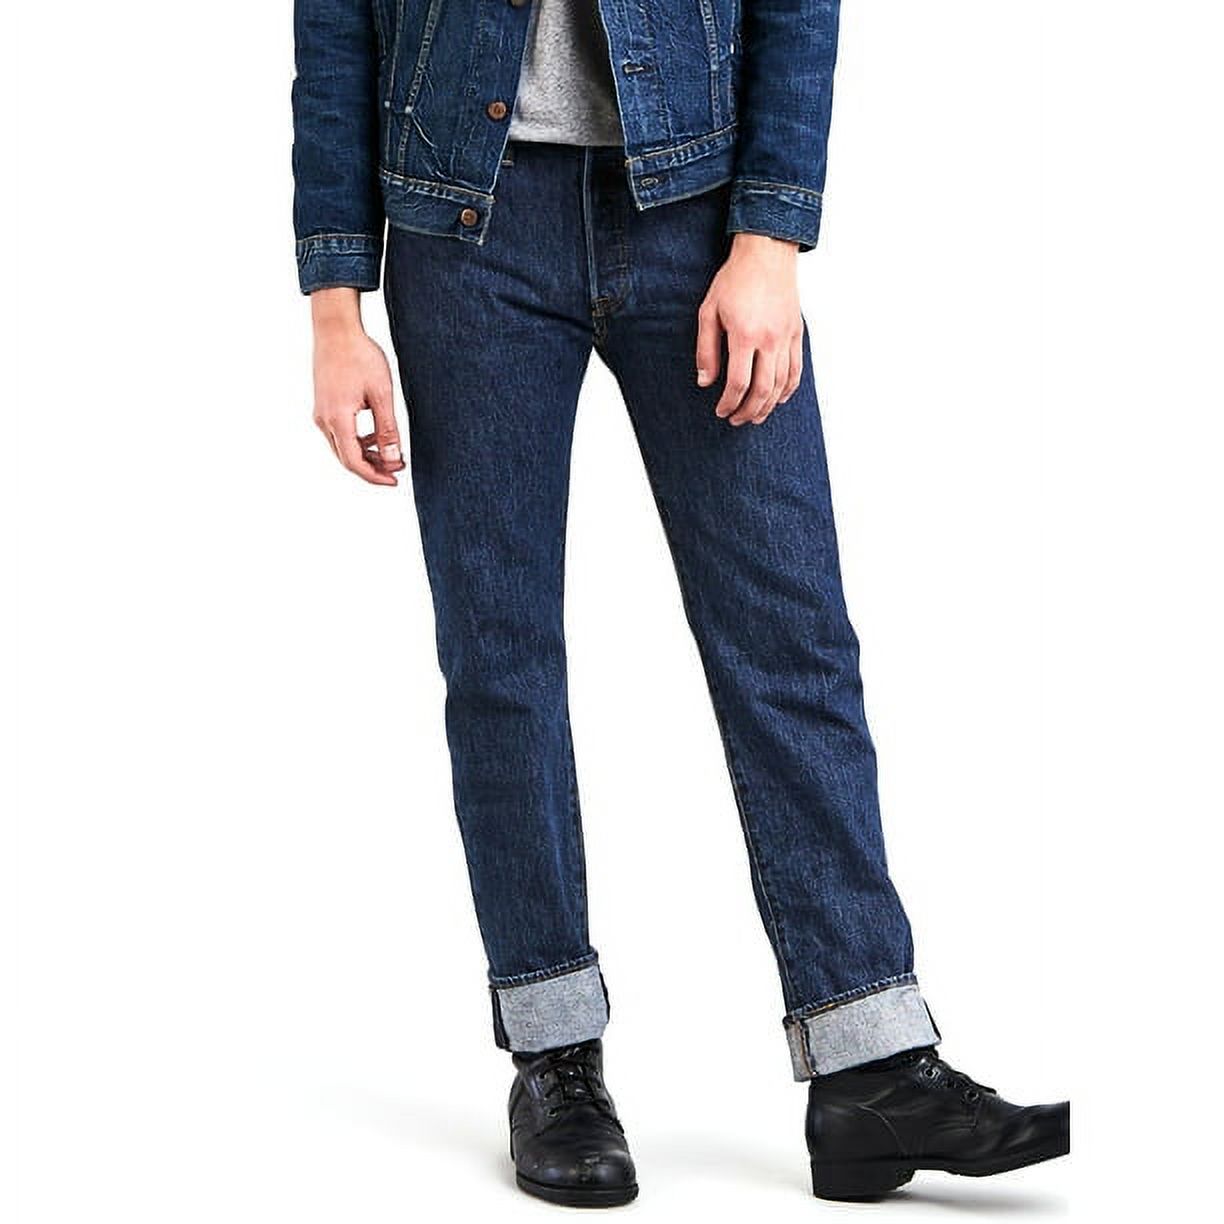 Levi's Men's Big & Tall 501 Original Fit Jeans - image 1 of 6